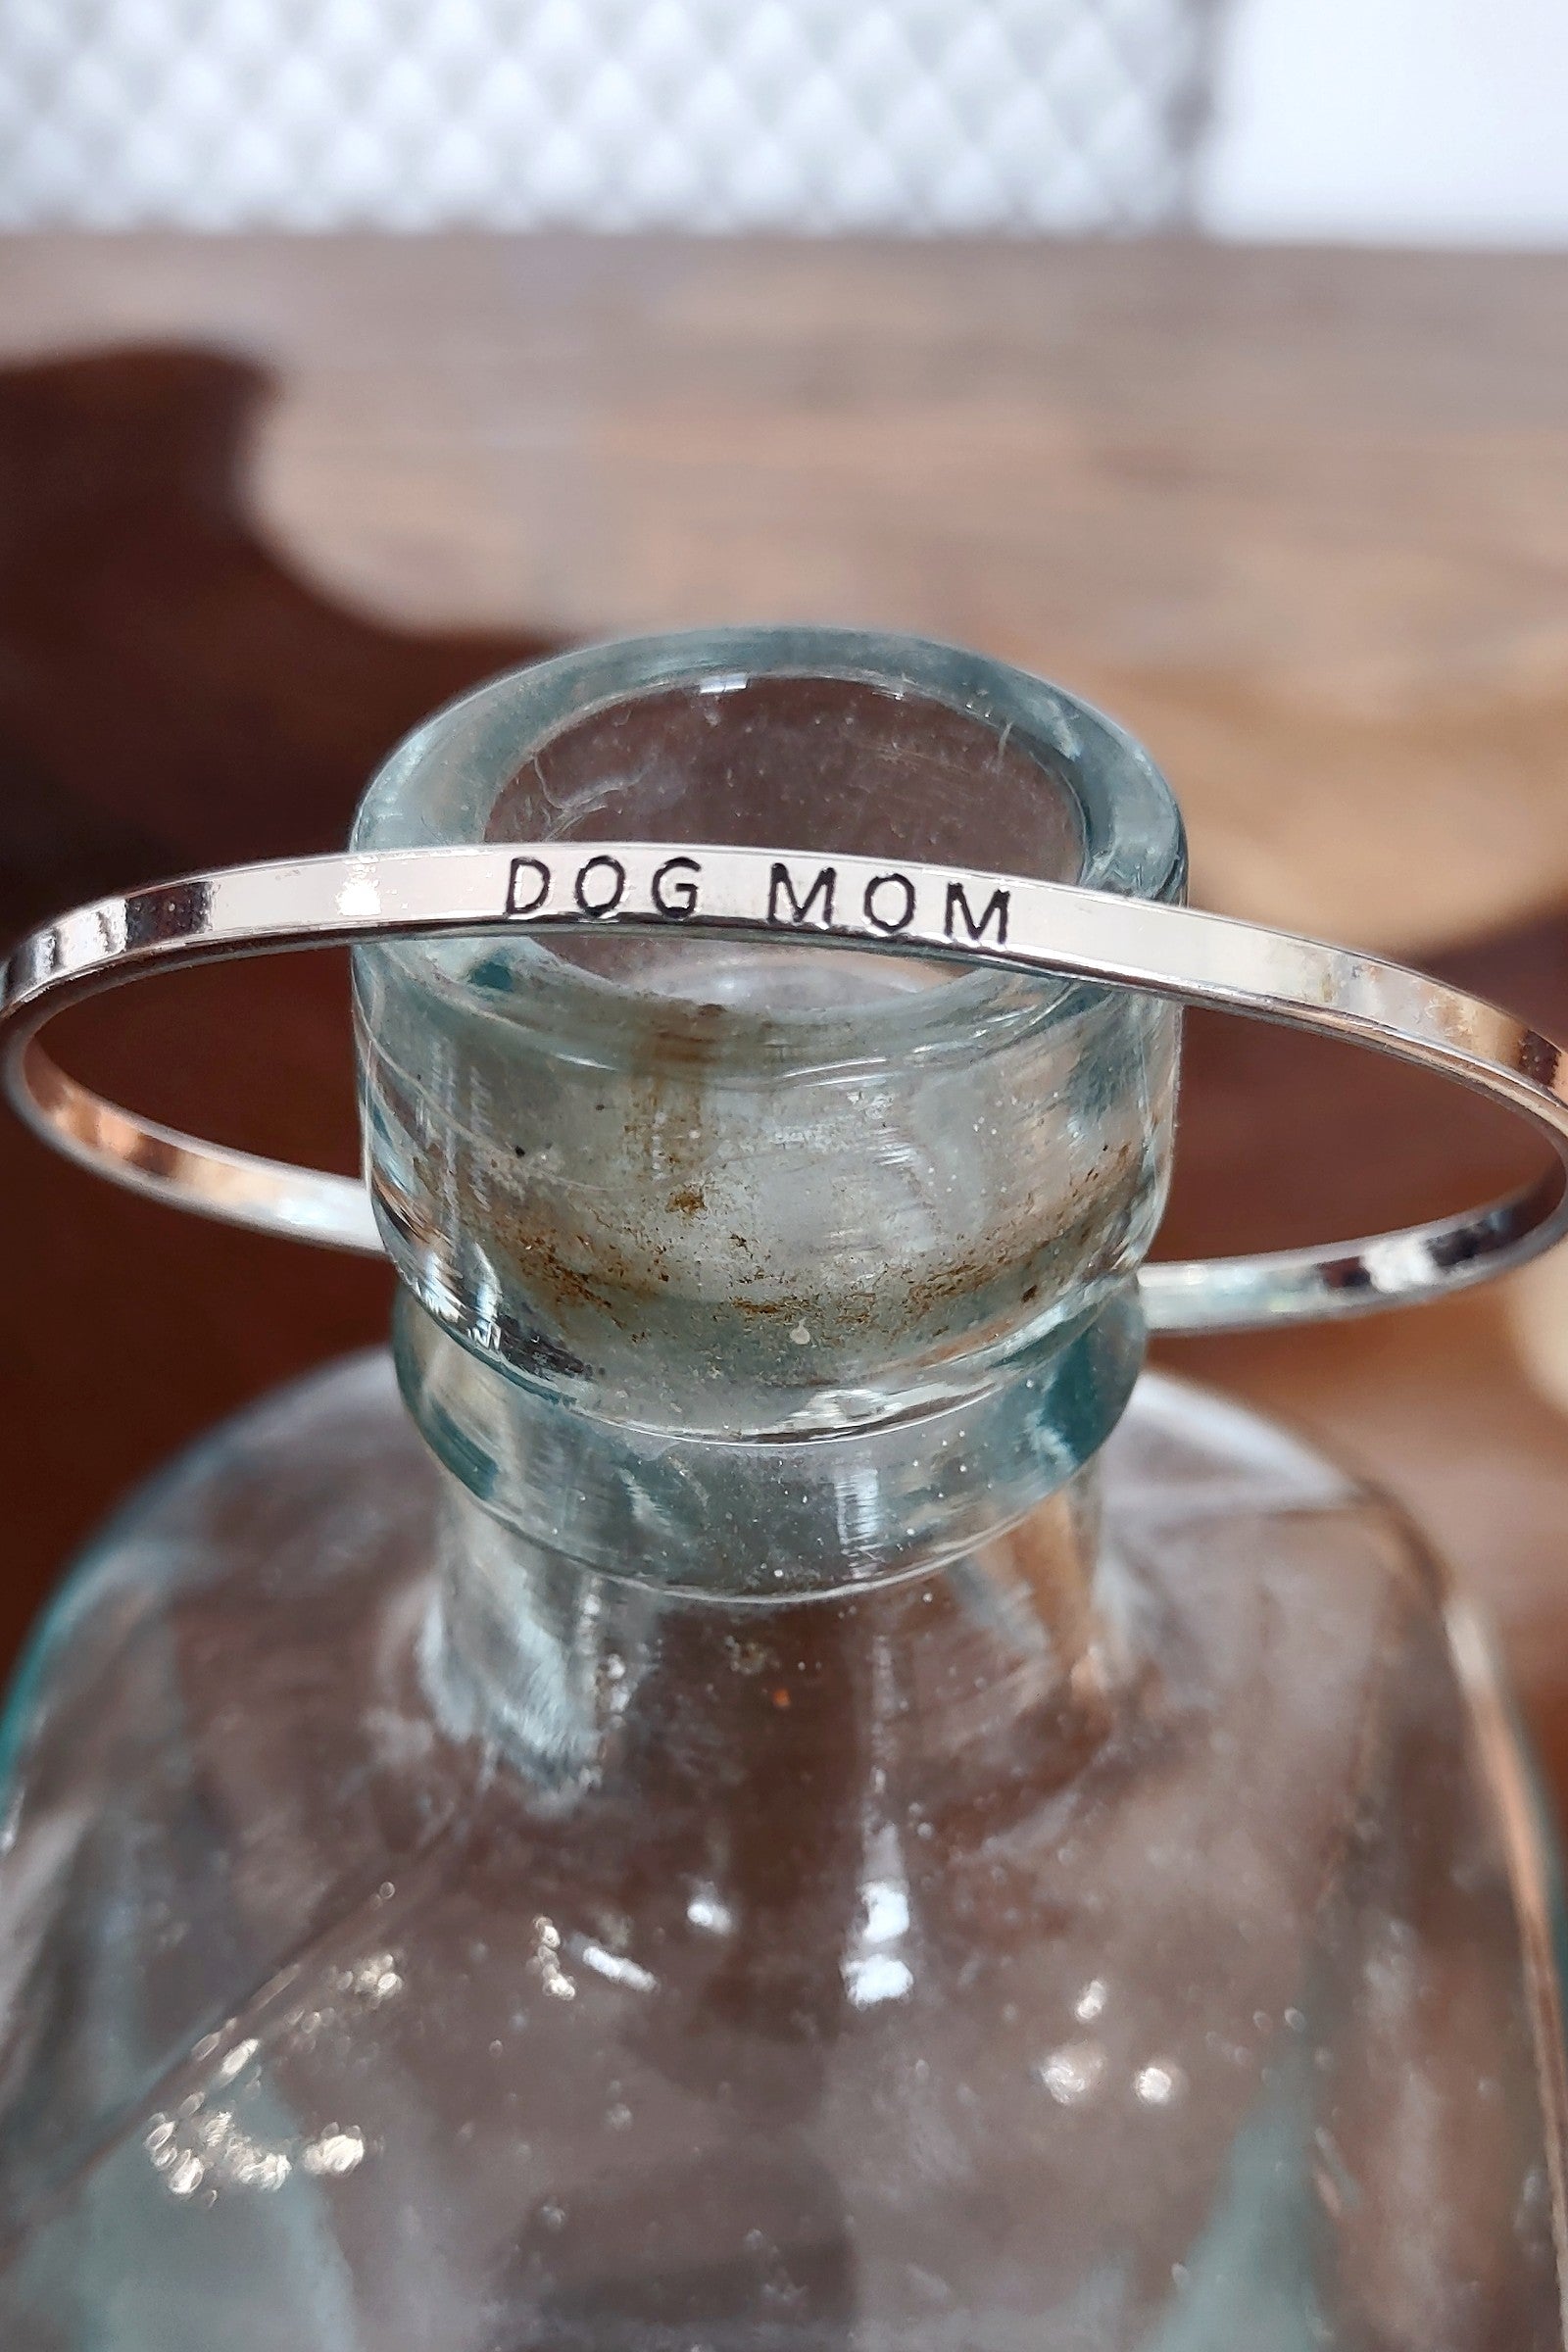 Dog Mom Silver Bangle Bracelet